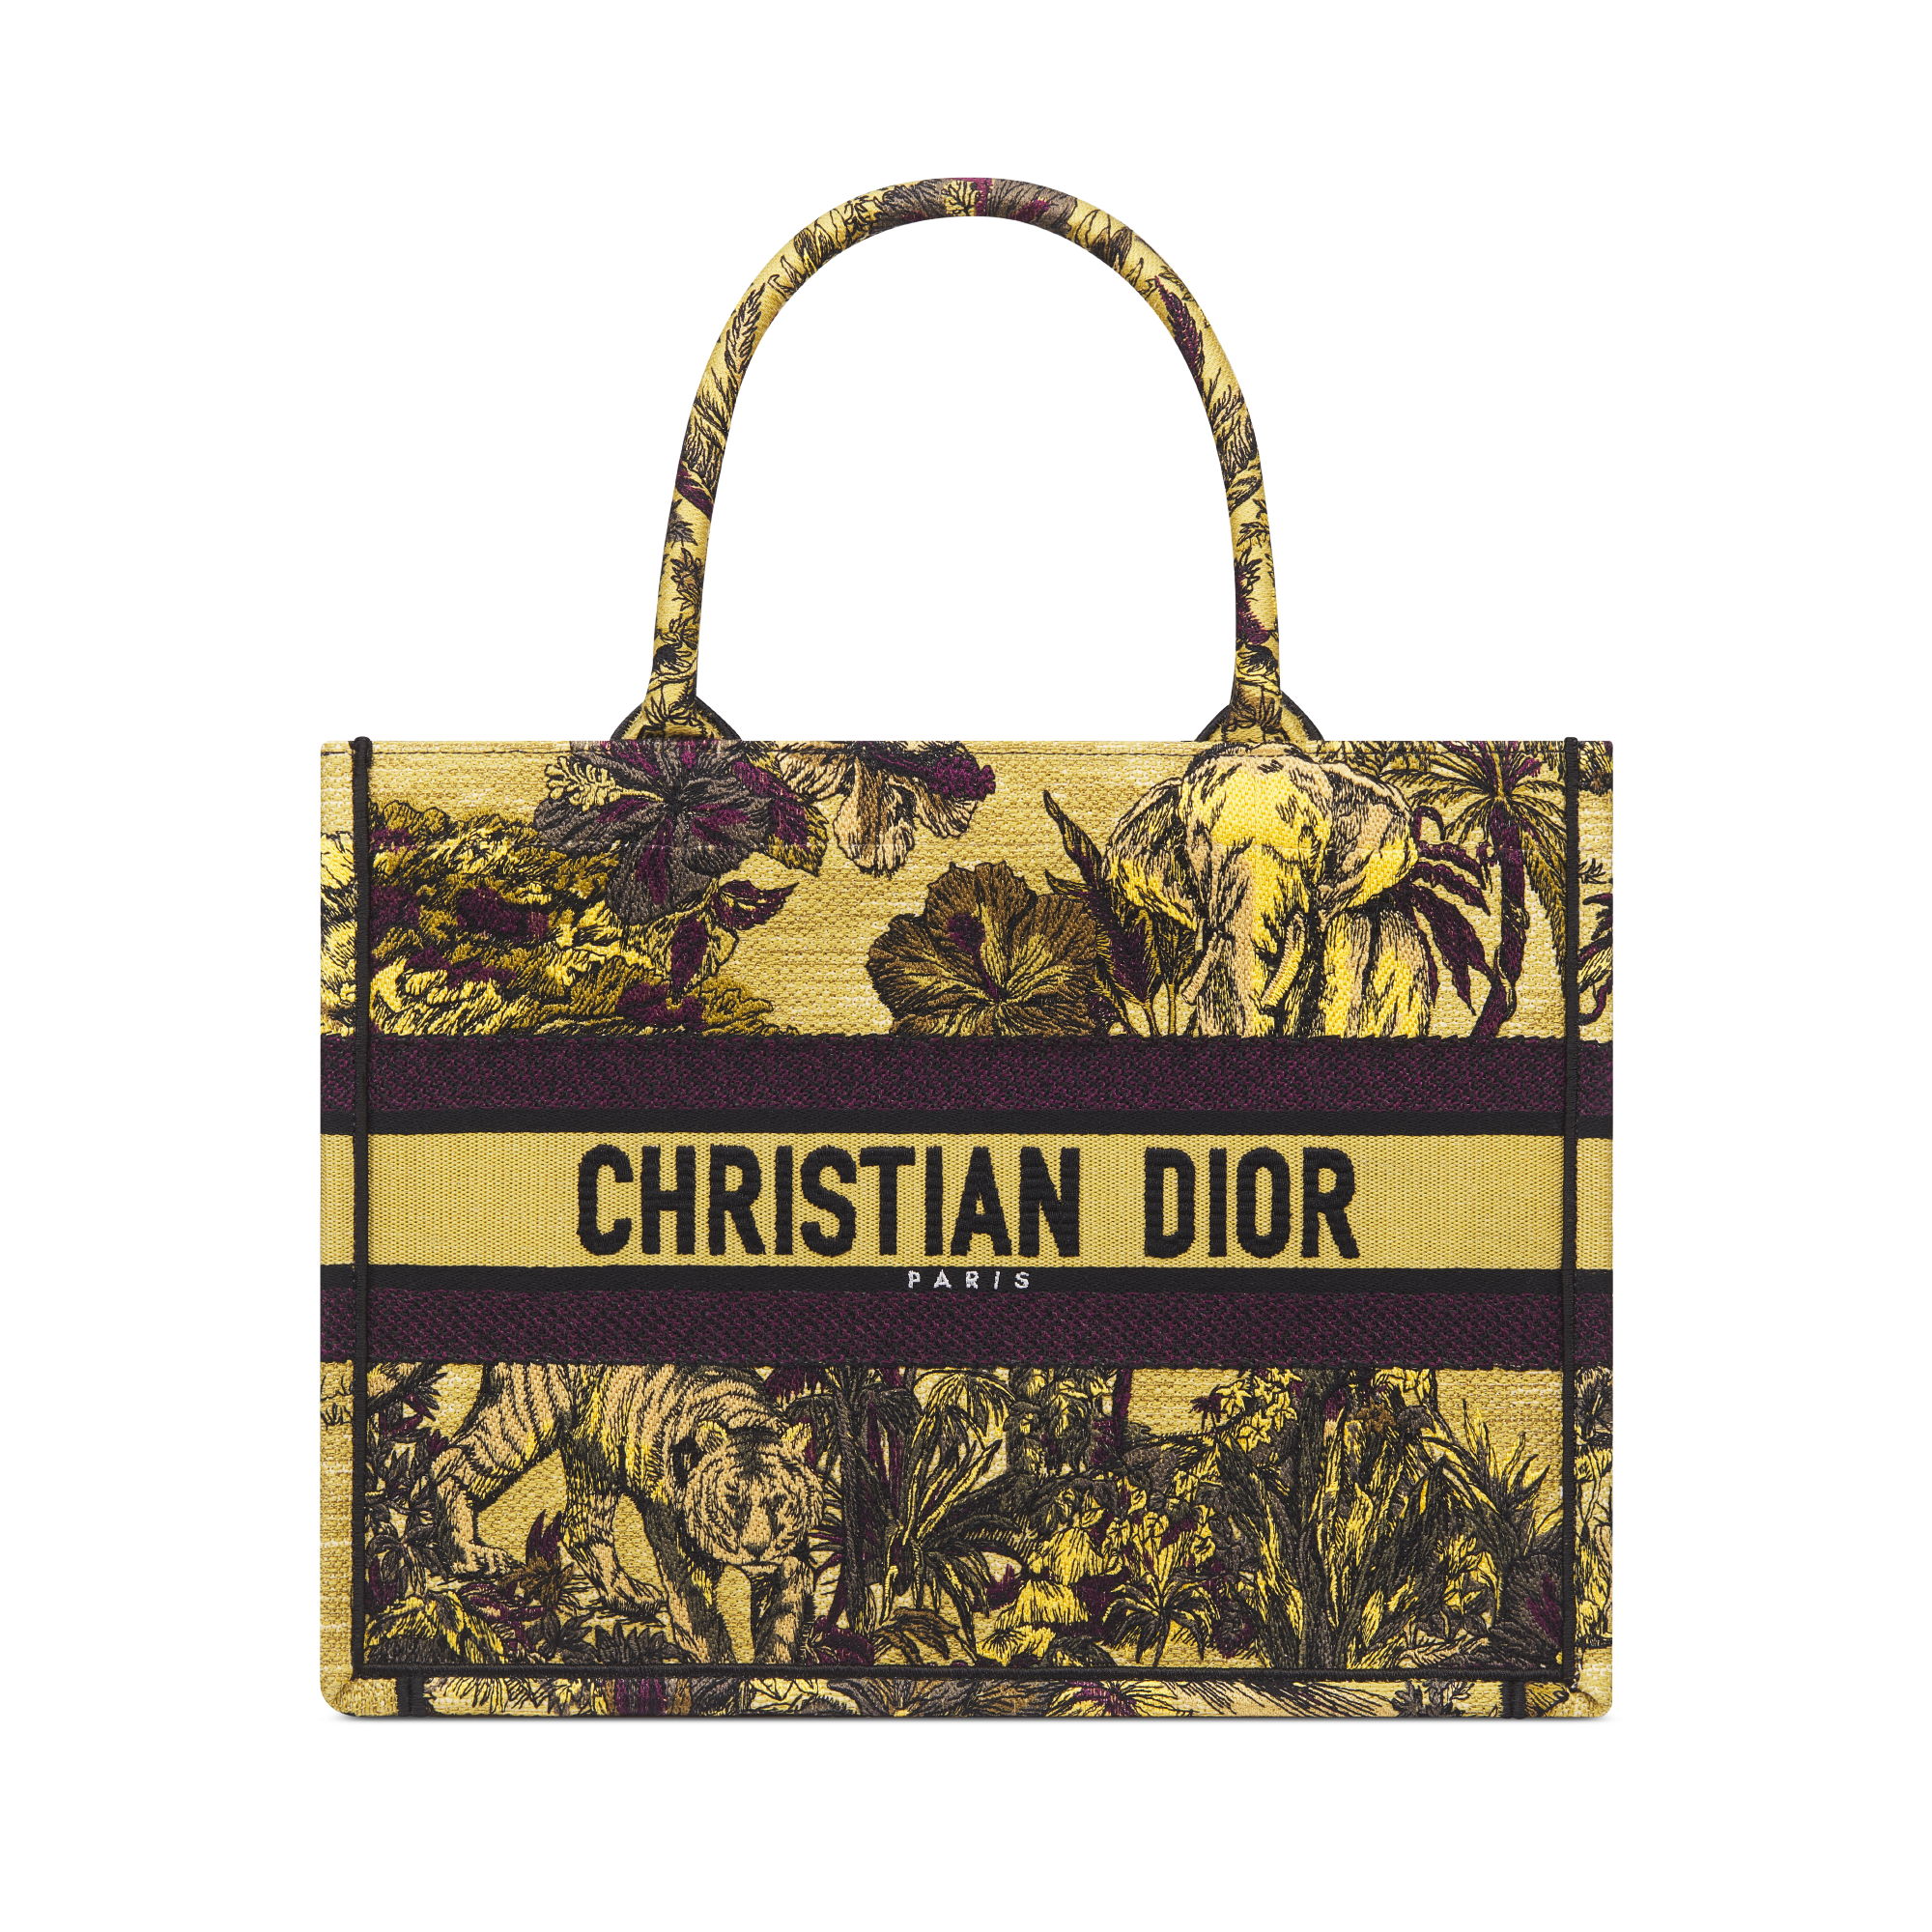 Introducing The Dior Bobby Bag